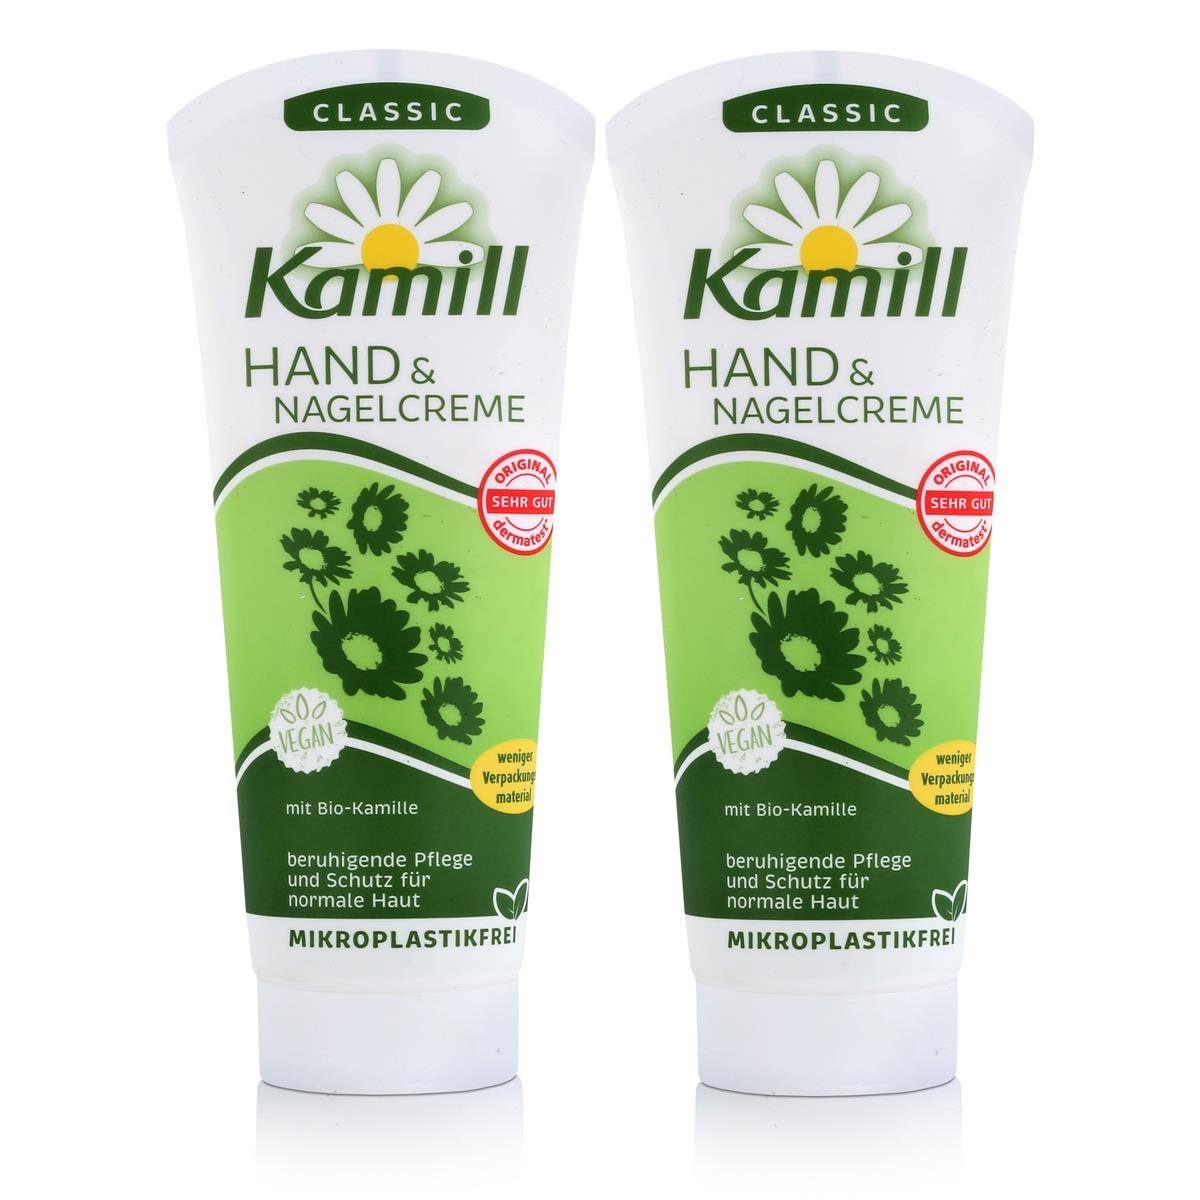 Kamill Hautcreme Kamill Hand & Nagelcreme Classic 100ml - Handcreme Kamillenextrakt (2e